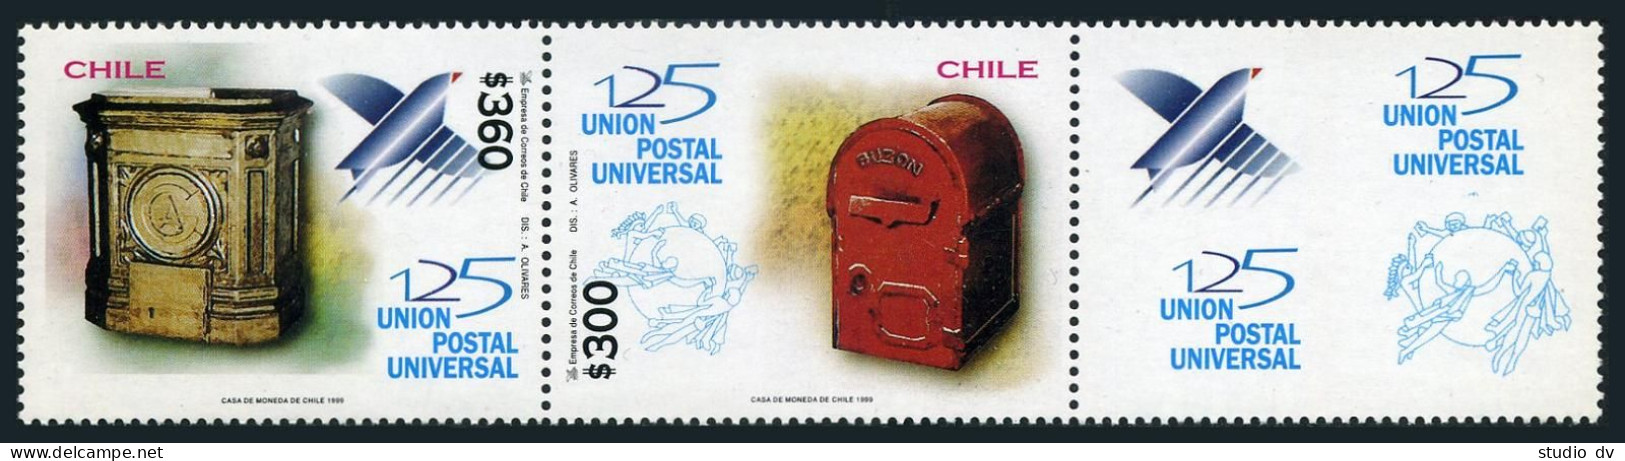 Chile 1302-1303a Pair/label, MNH. Michel 1913-1914 Zf. UPU-125, 1999. Mailbox. - Cile